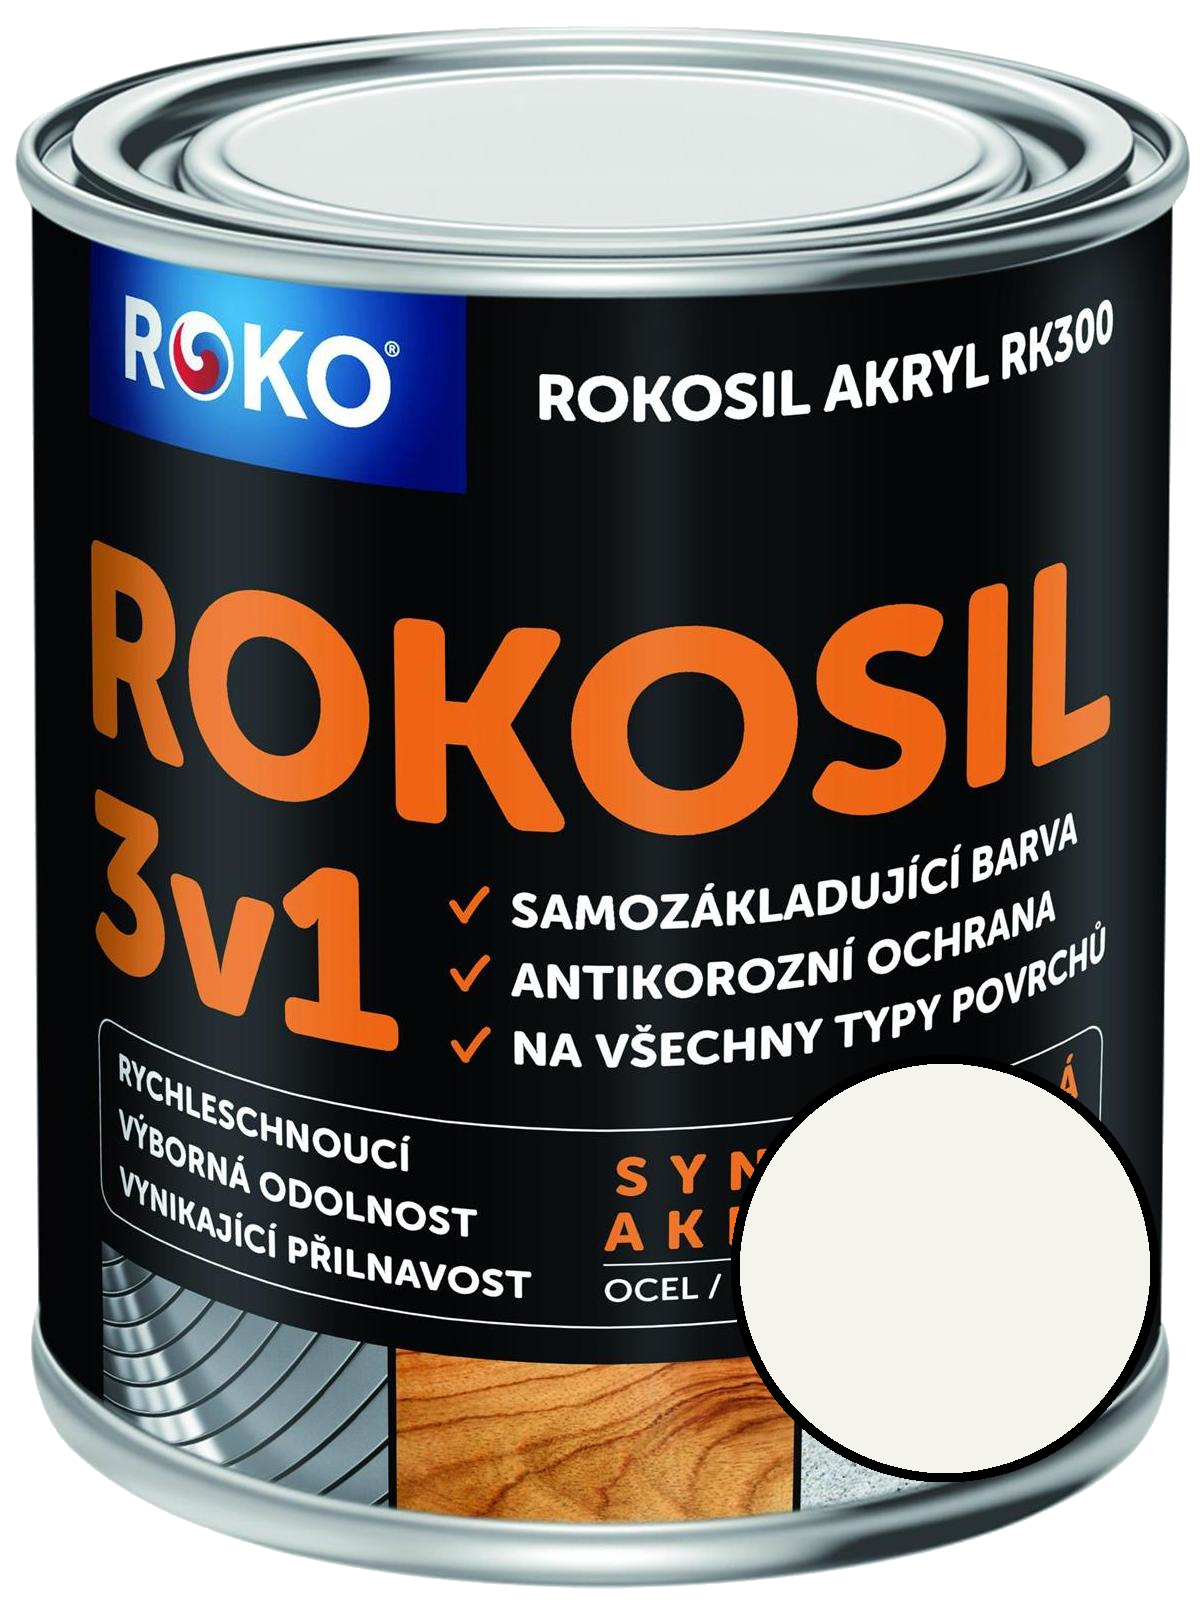 Barva samozákladující Rokosil akryl 3v1 RK 300 1000 bílá mat